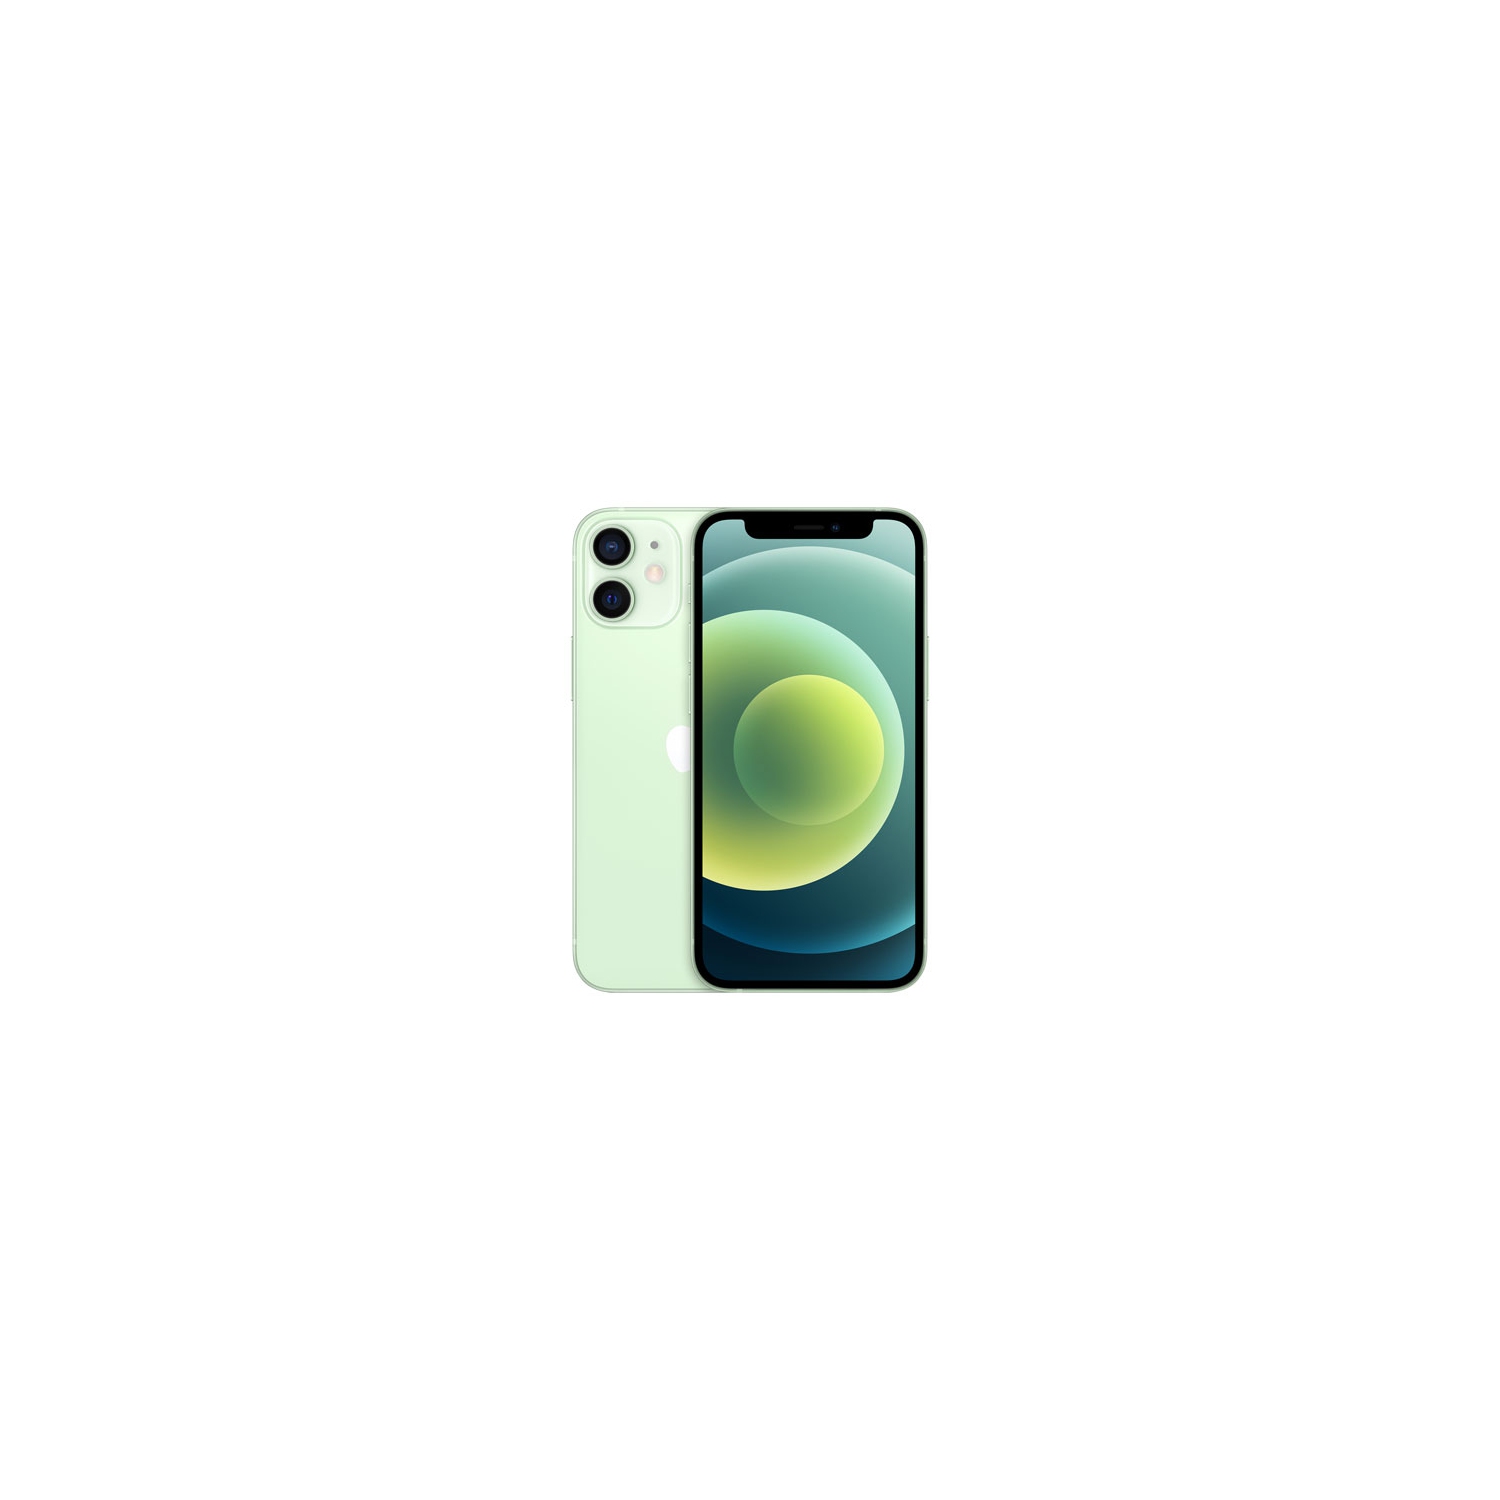 Refurbished (Excellent) - Apple iPhone 12 mini 128GB Smartphone - Green - Unlocked - Certified Refurbished